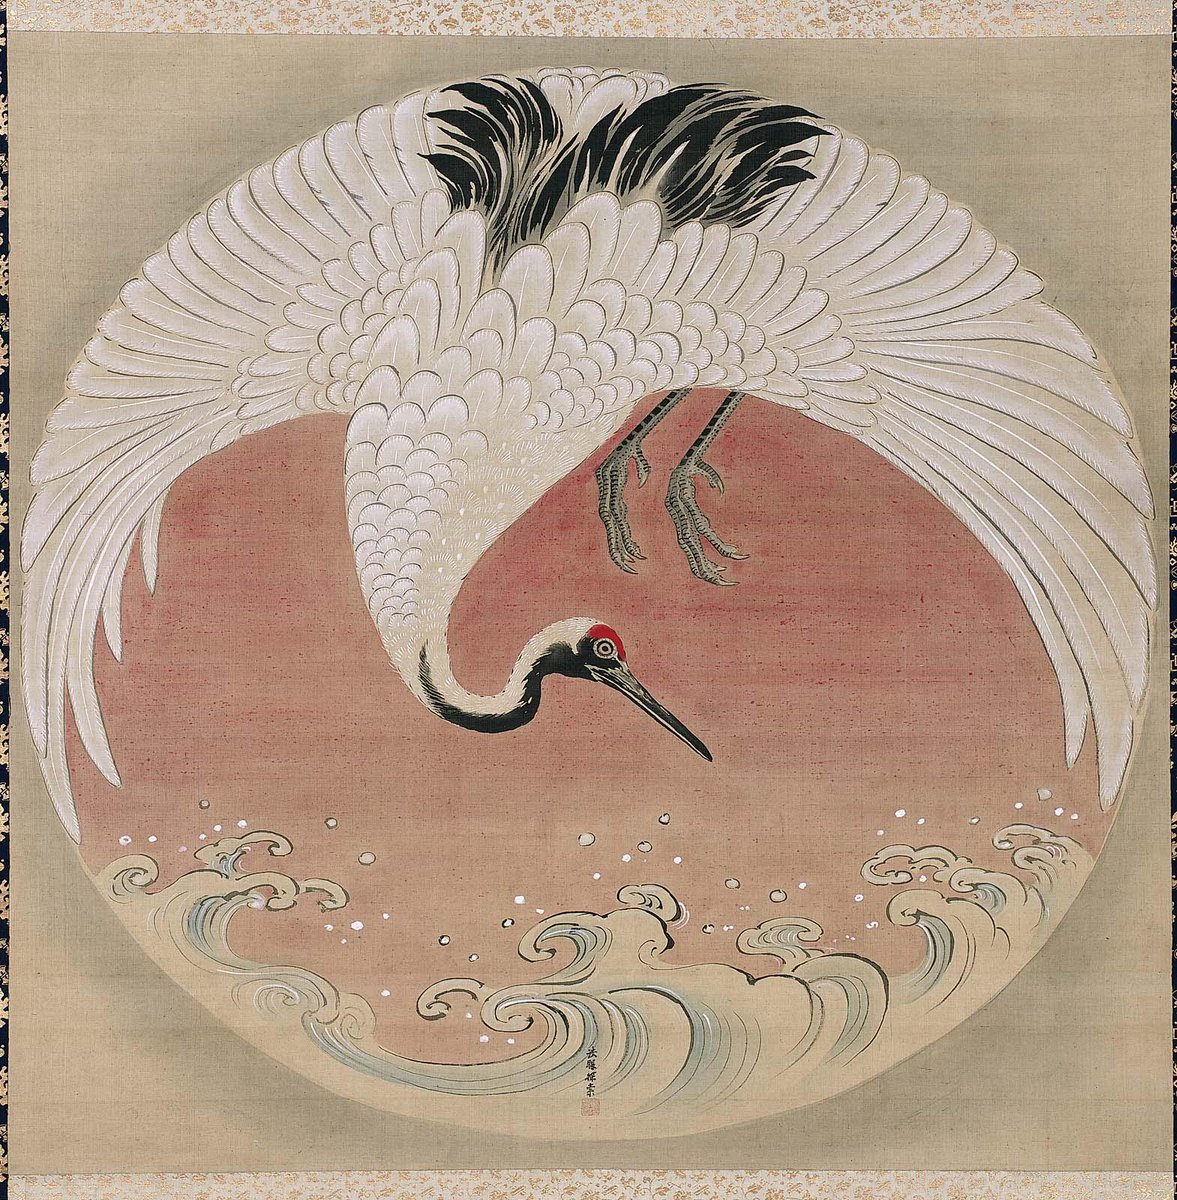 Crane and Waves, by Tsuruzawa Tansaku Morihiro, latter half of the 18th century

#kanoschool #japaneseart